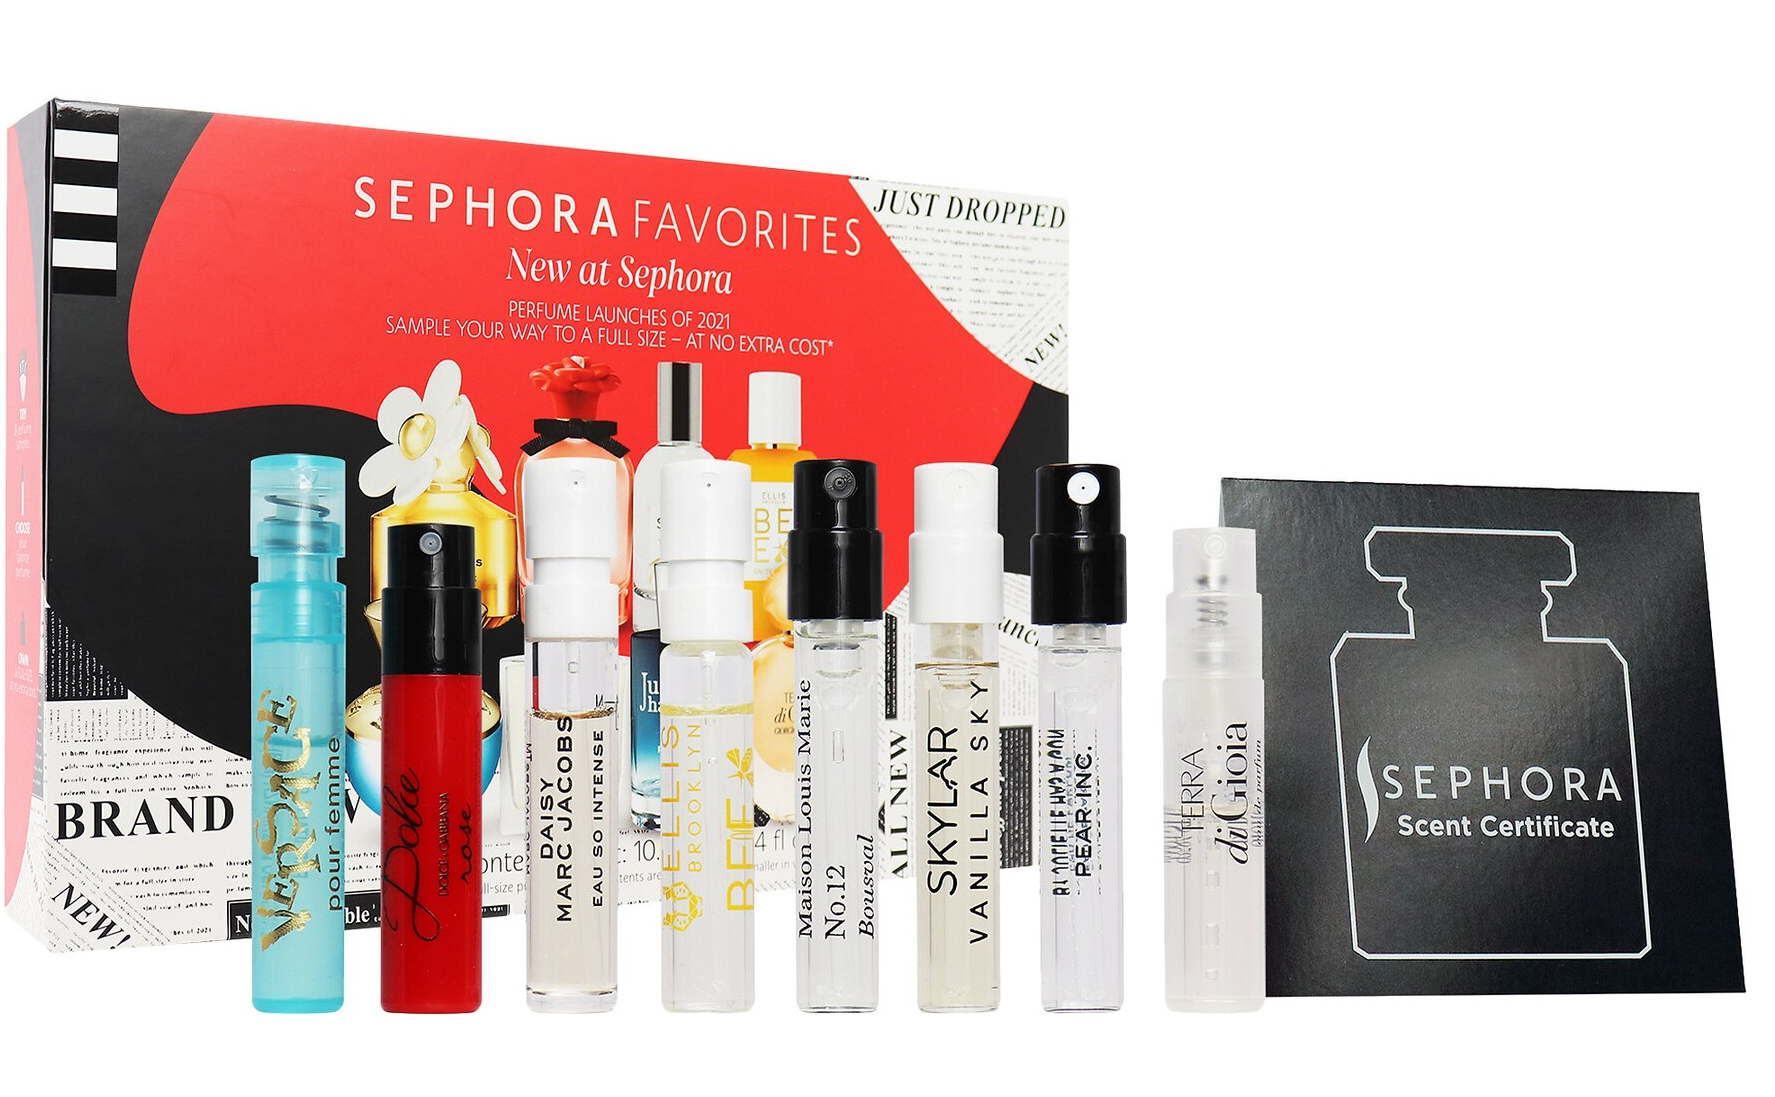 Sephora Favorites New at Sephora Perfume Sampler Set Available Now